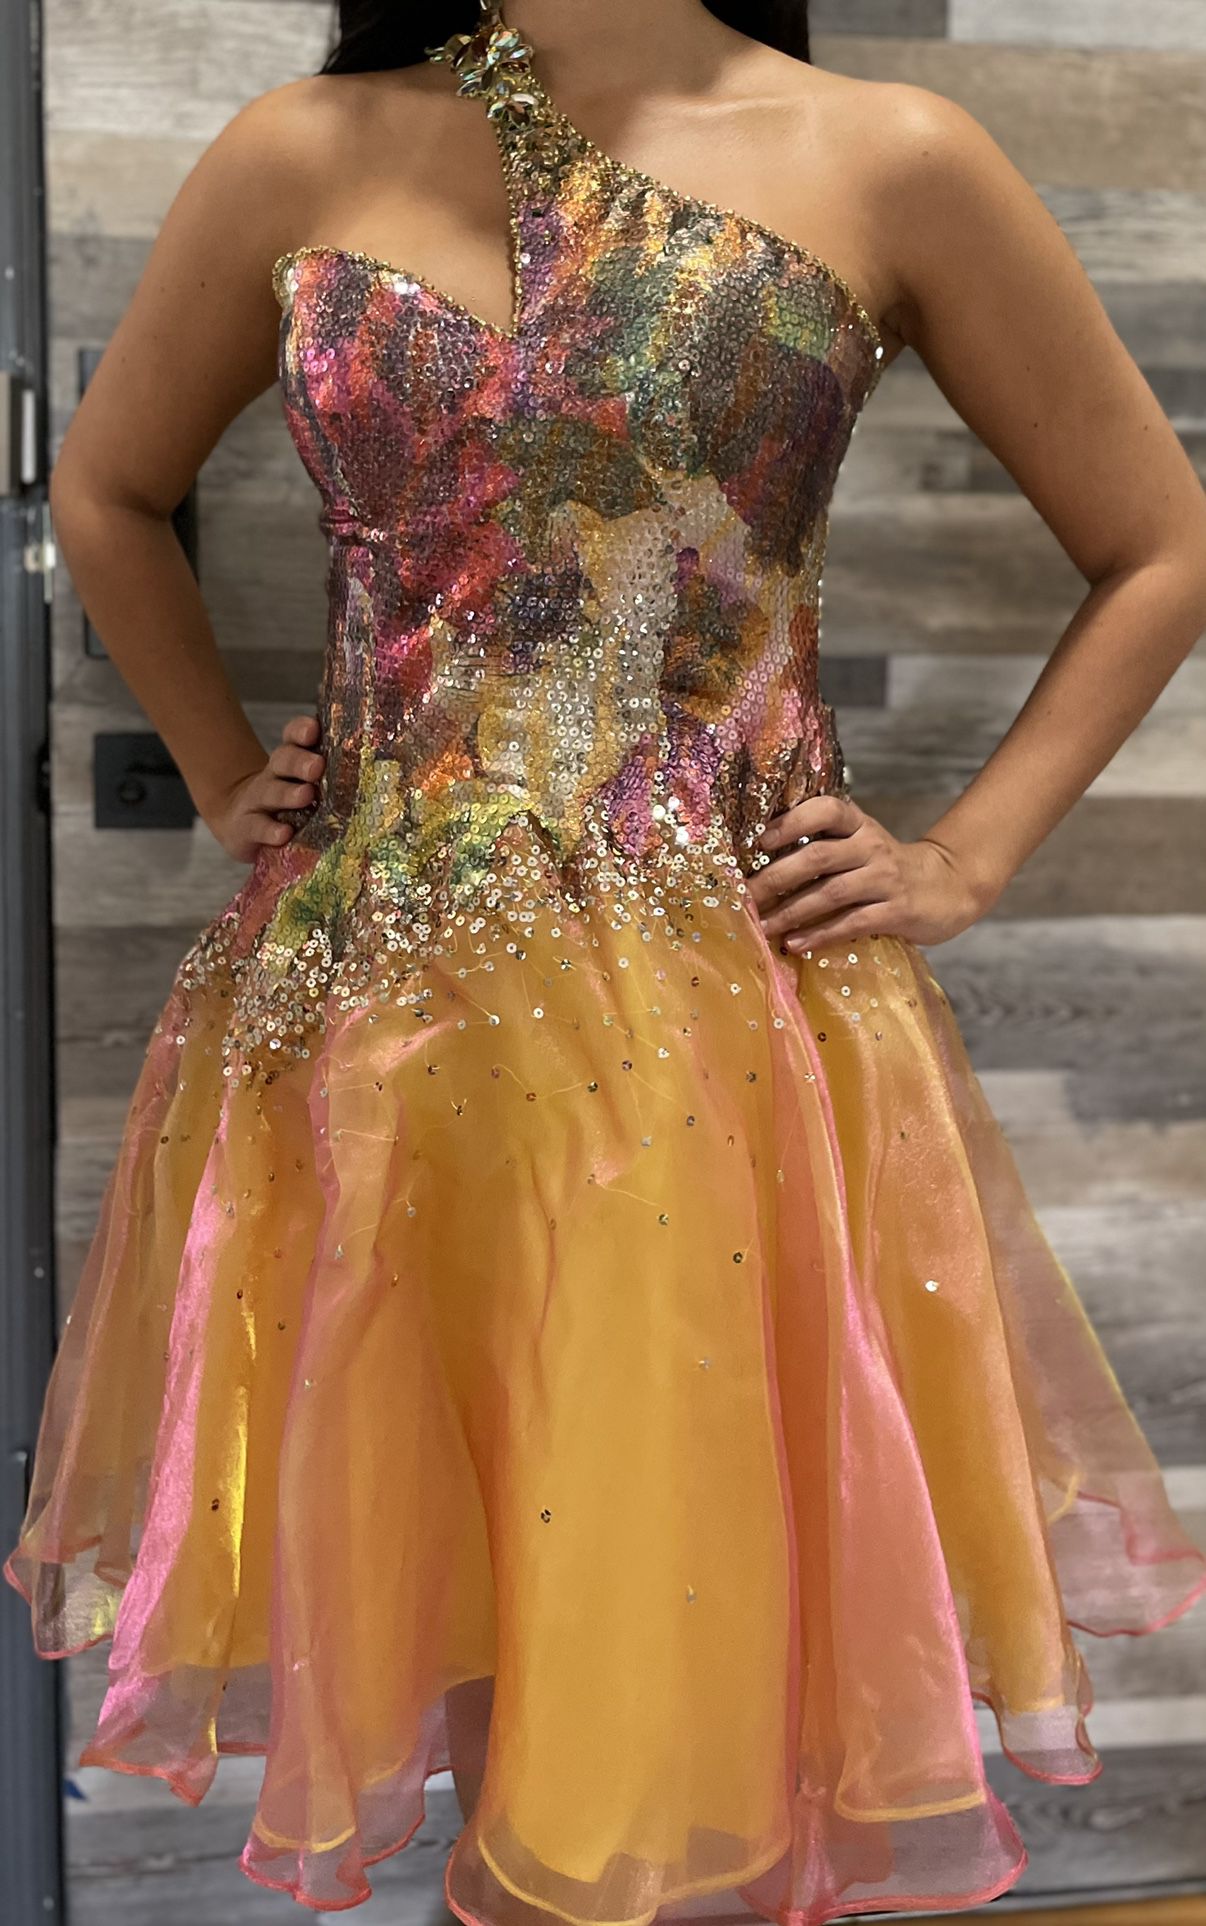 Prom Blush Prom Dress Used Once Like New Dress Designer